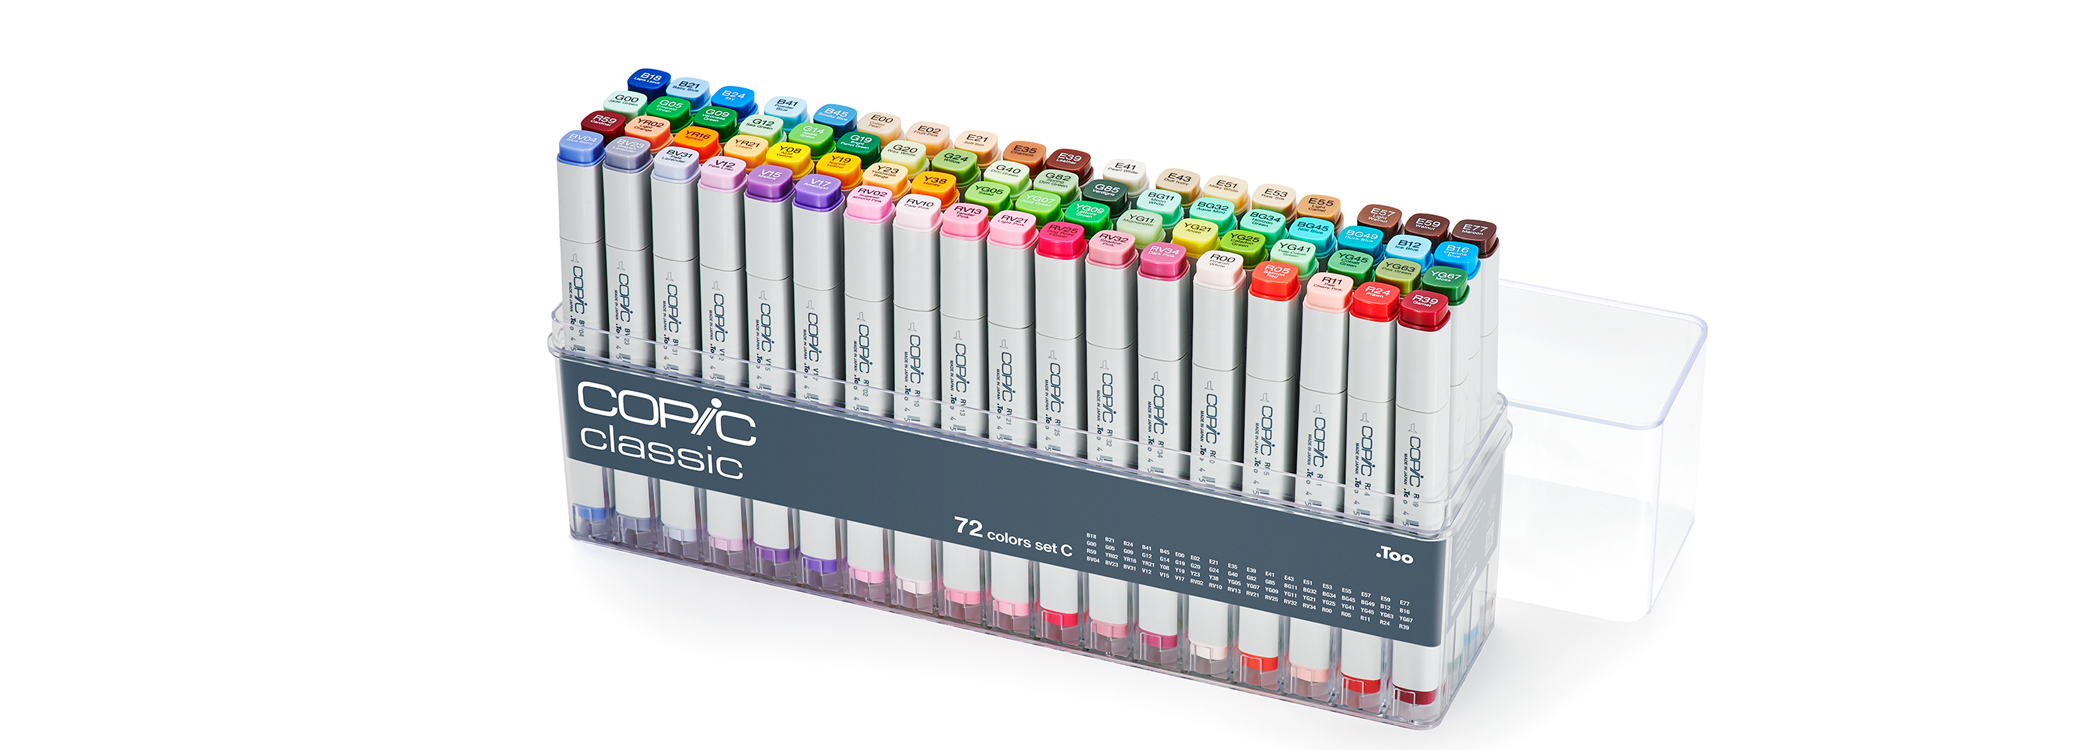 Copic Classic 72 colors set C - COPIC Official Website